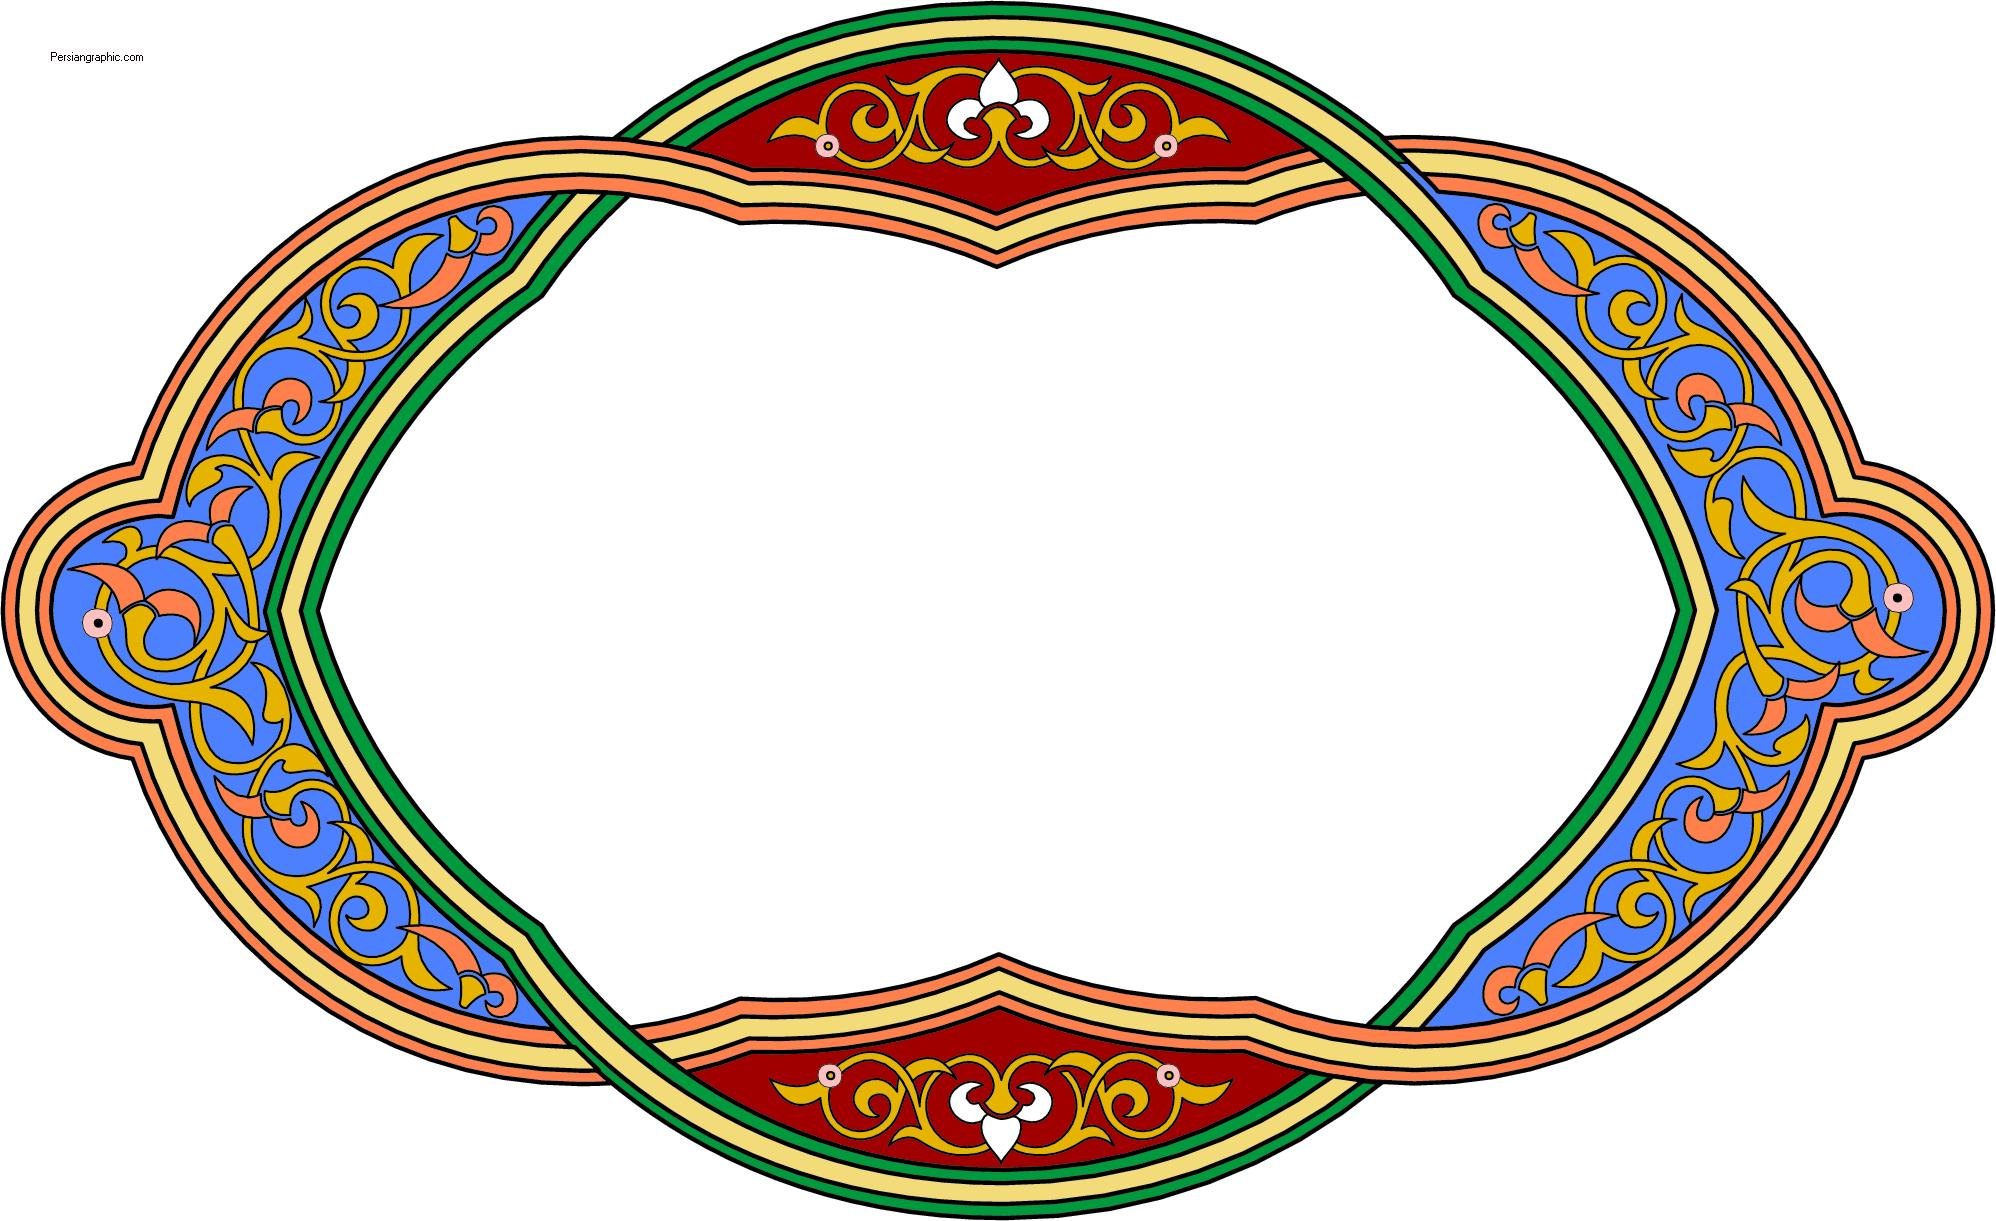 Казахский орнамент рамка